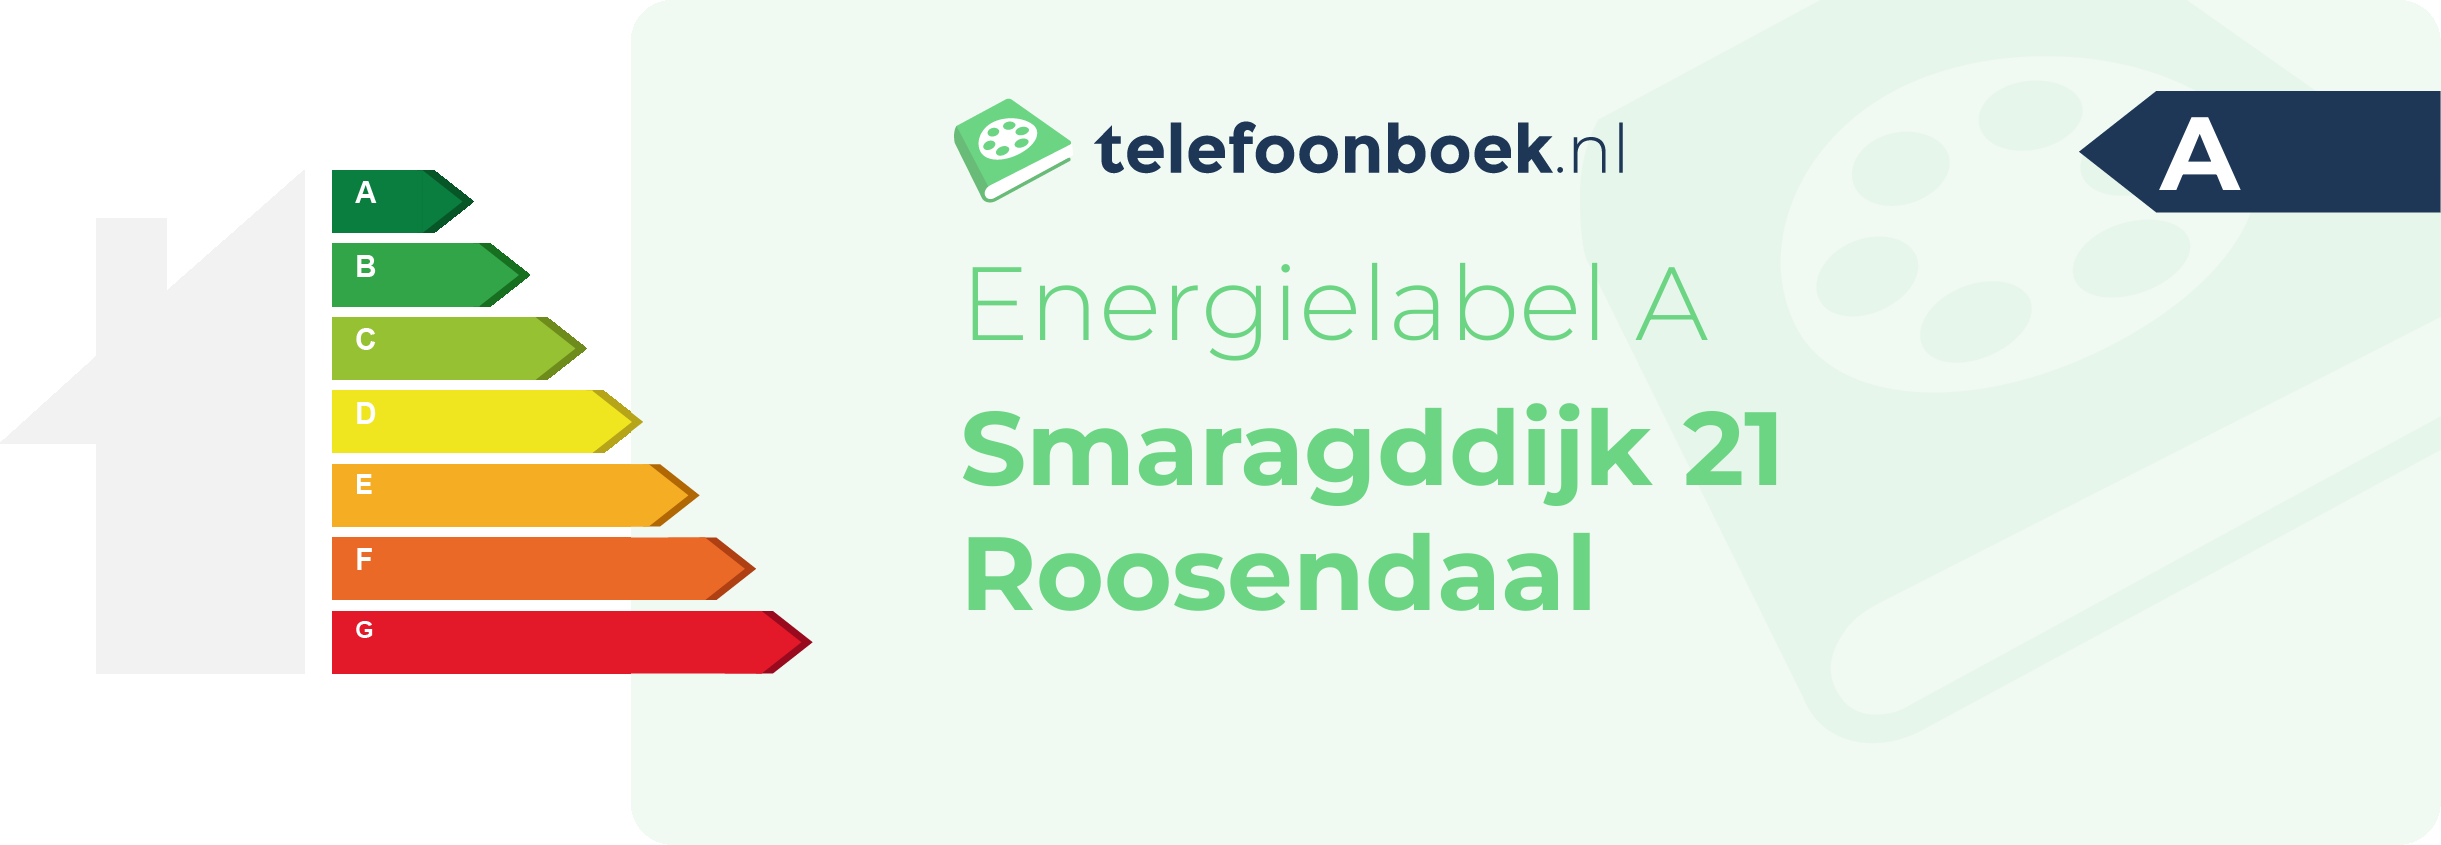 Energielabel Smaragddijk 21 Roosendaal